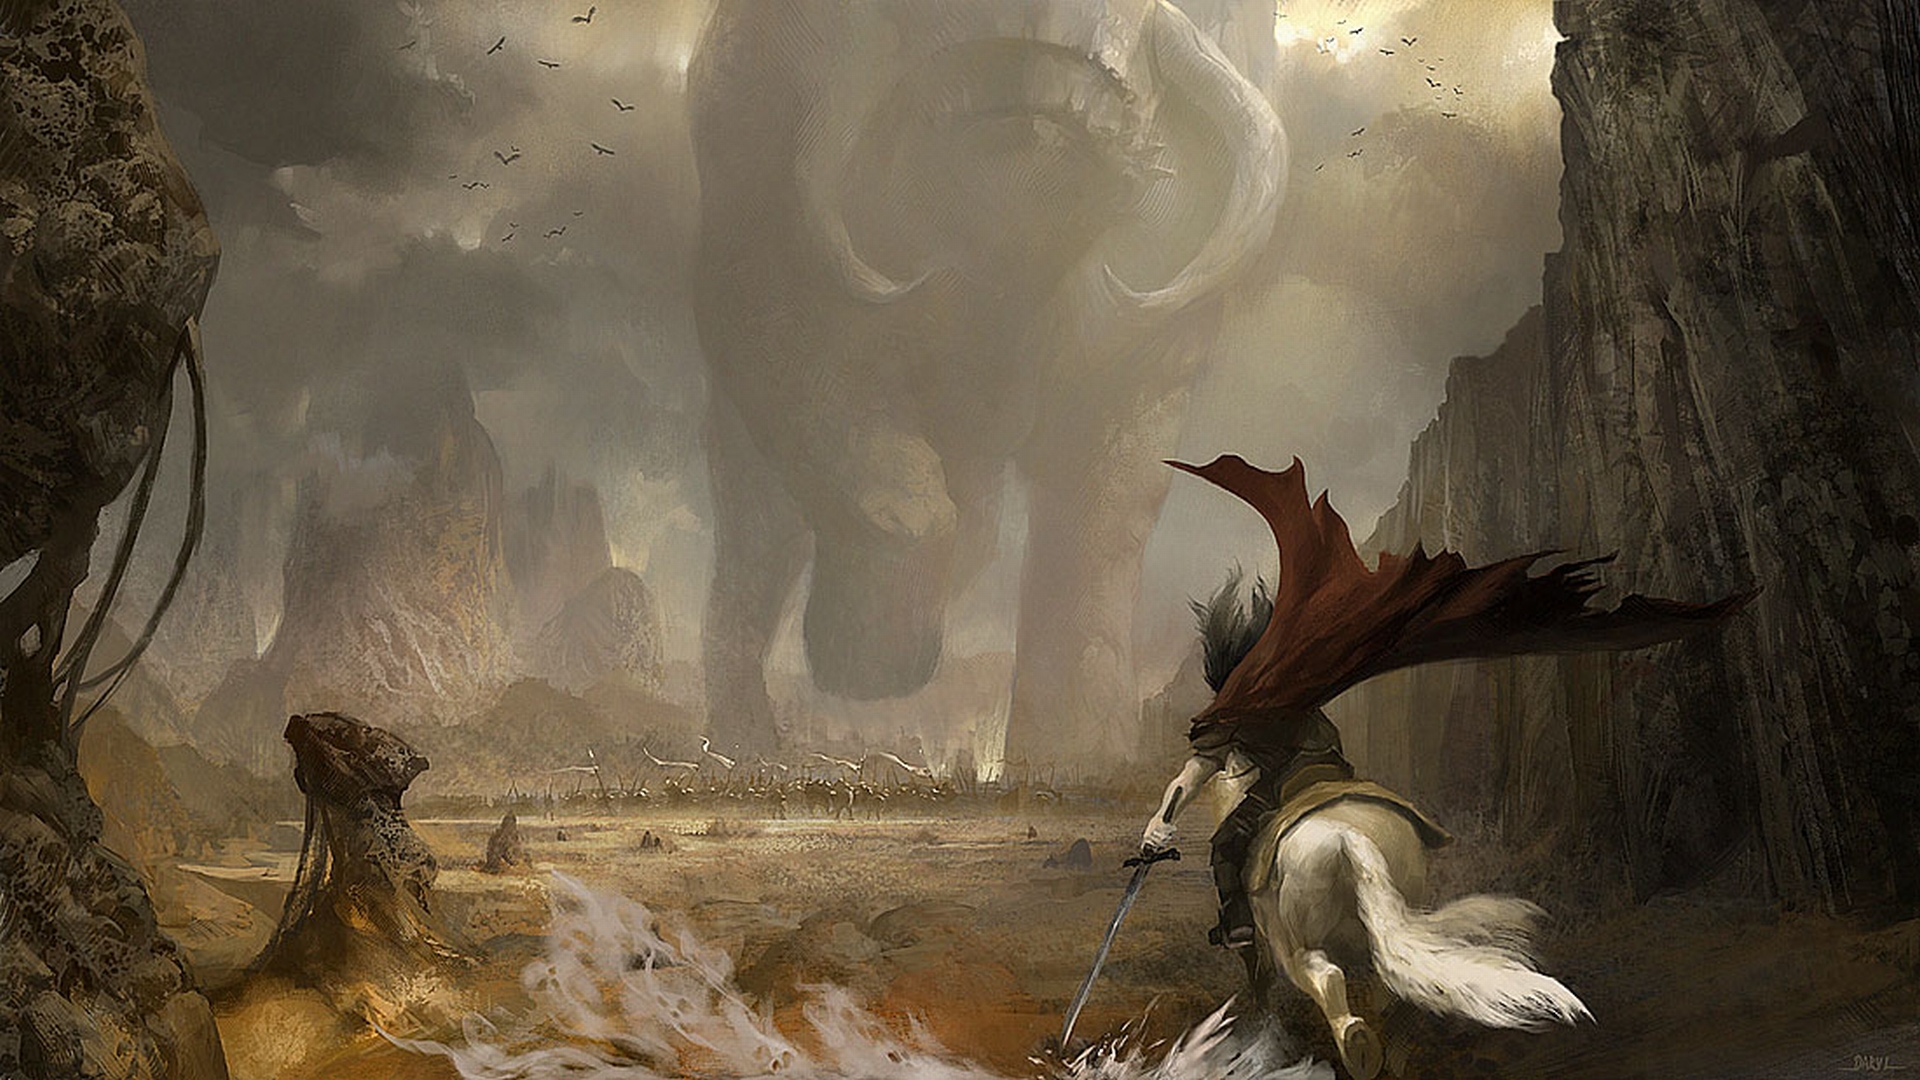 A mystical battle unfolds in a dark fantasy world, illustrated by Daniel Ljunggren in Dark Future.